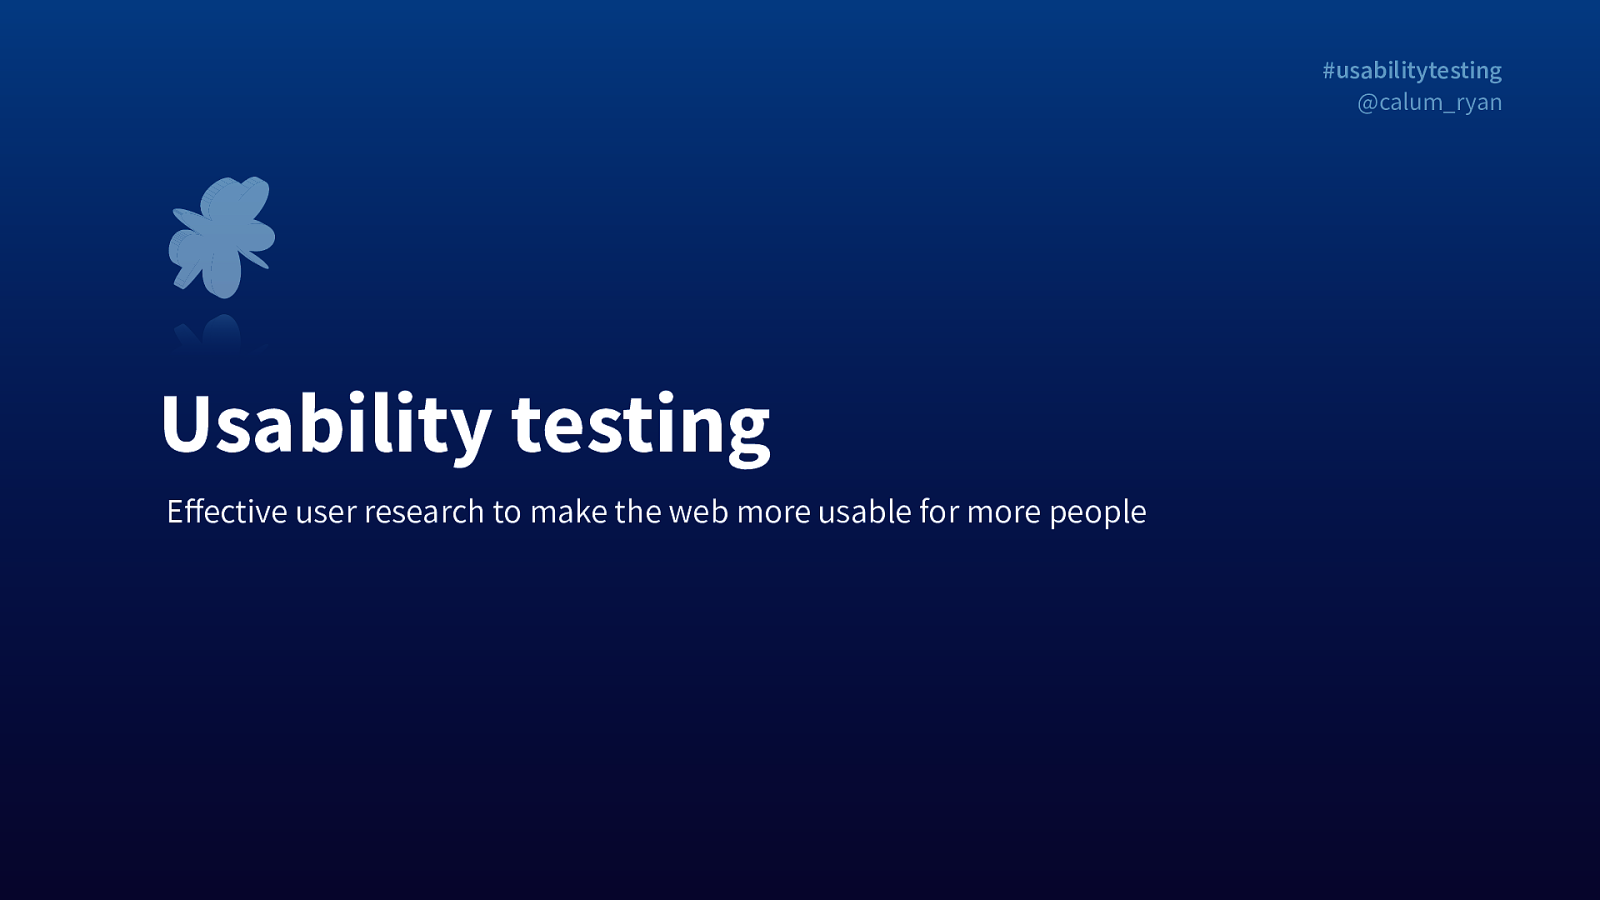 Usability testing